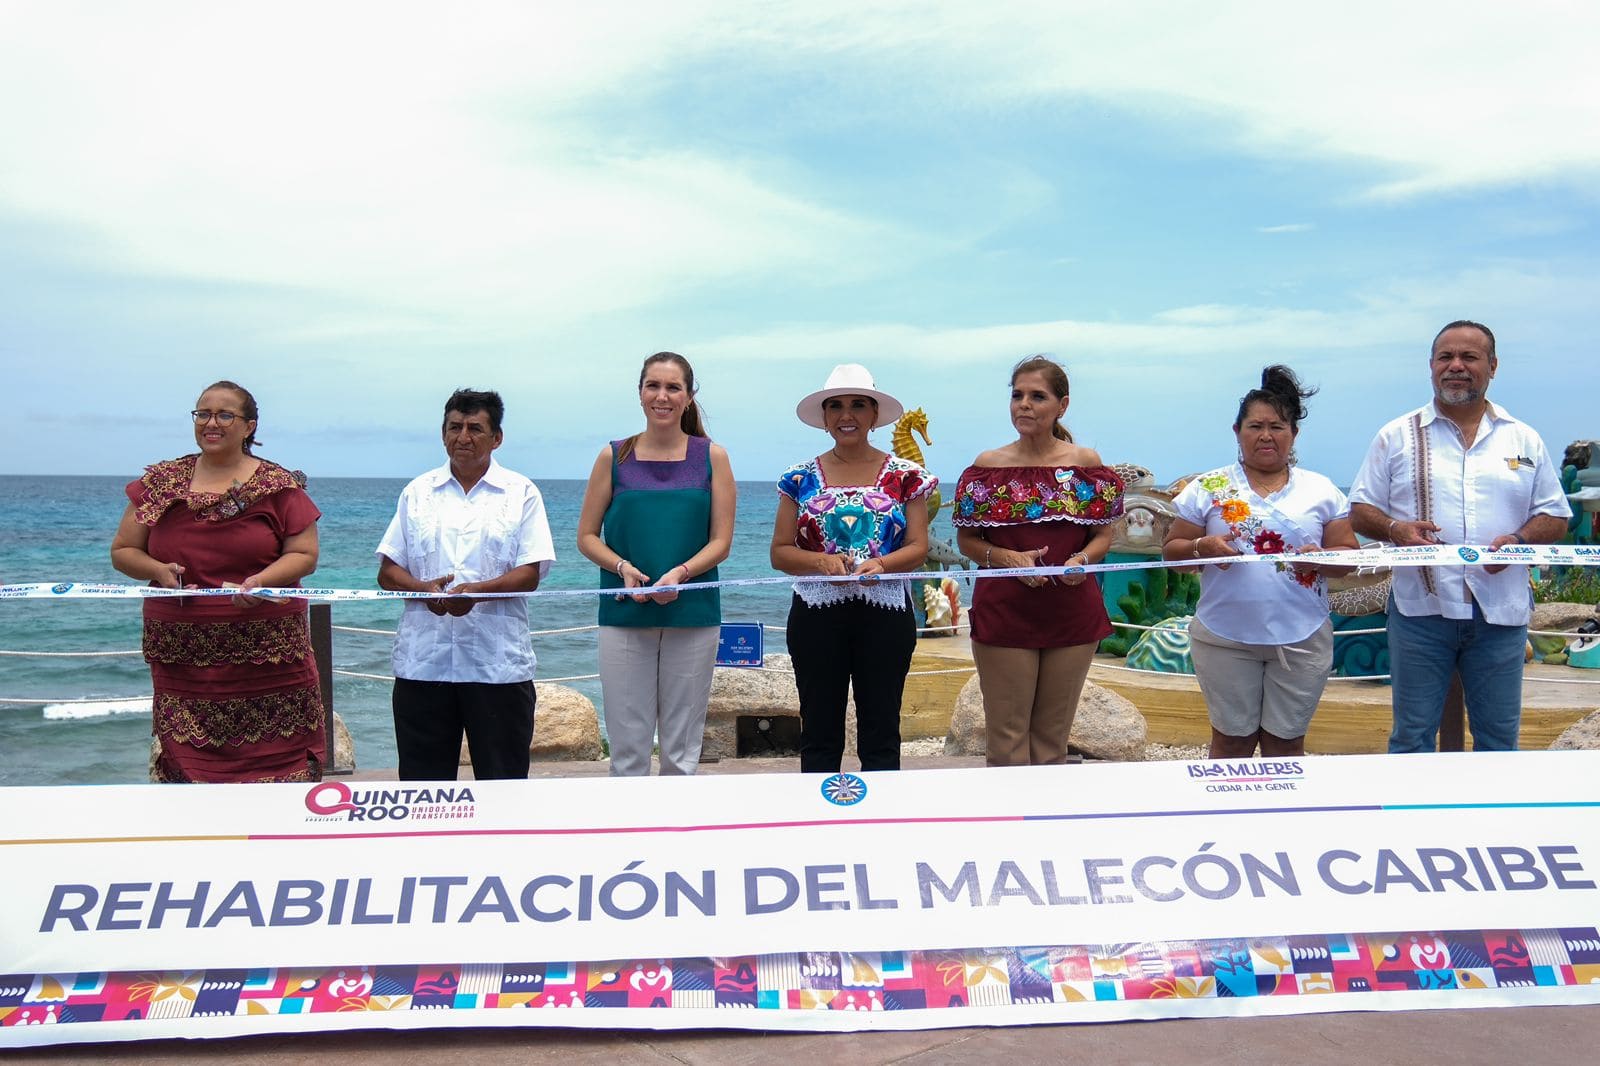 Reinauguran el Malecón del Caribe en Isla Mujeres